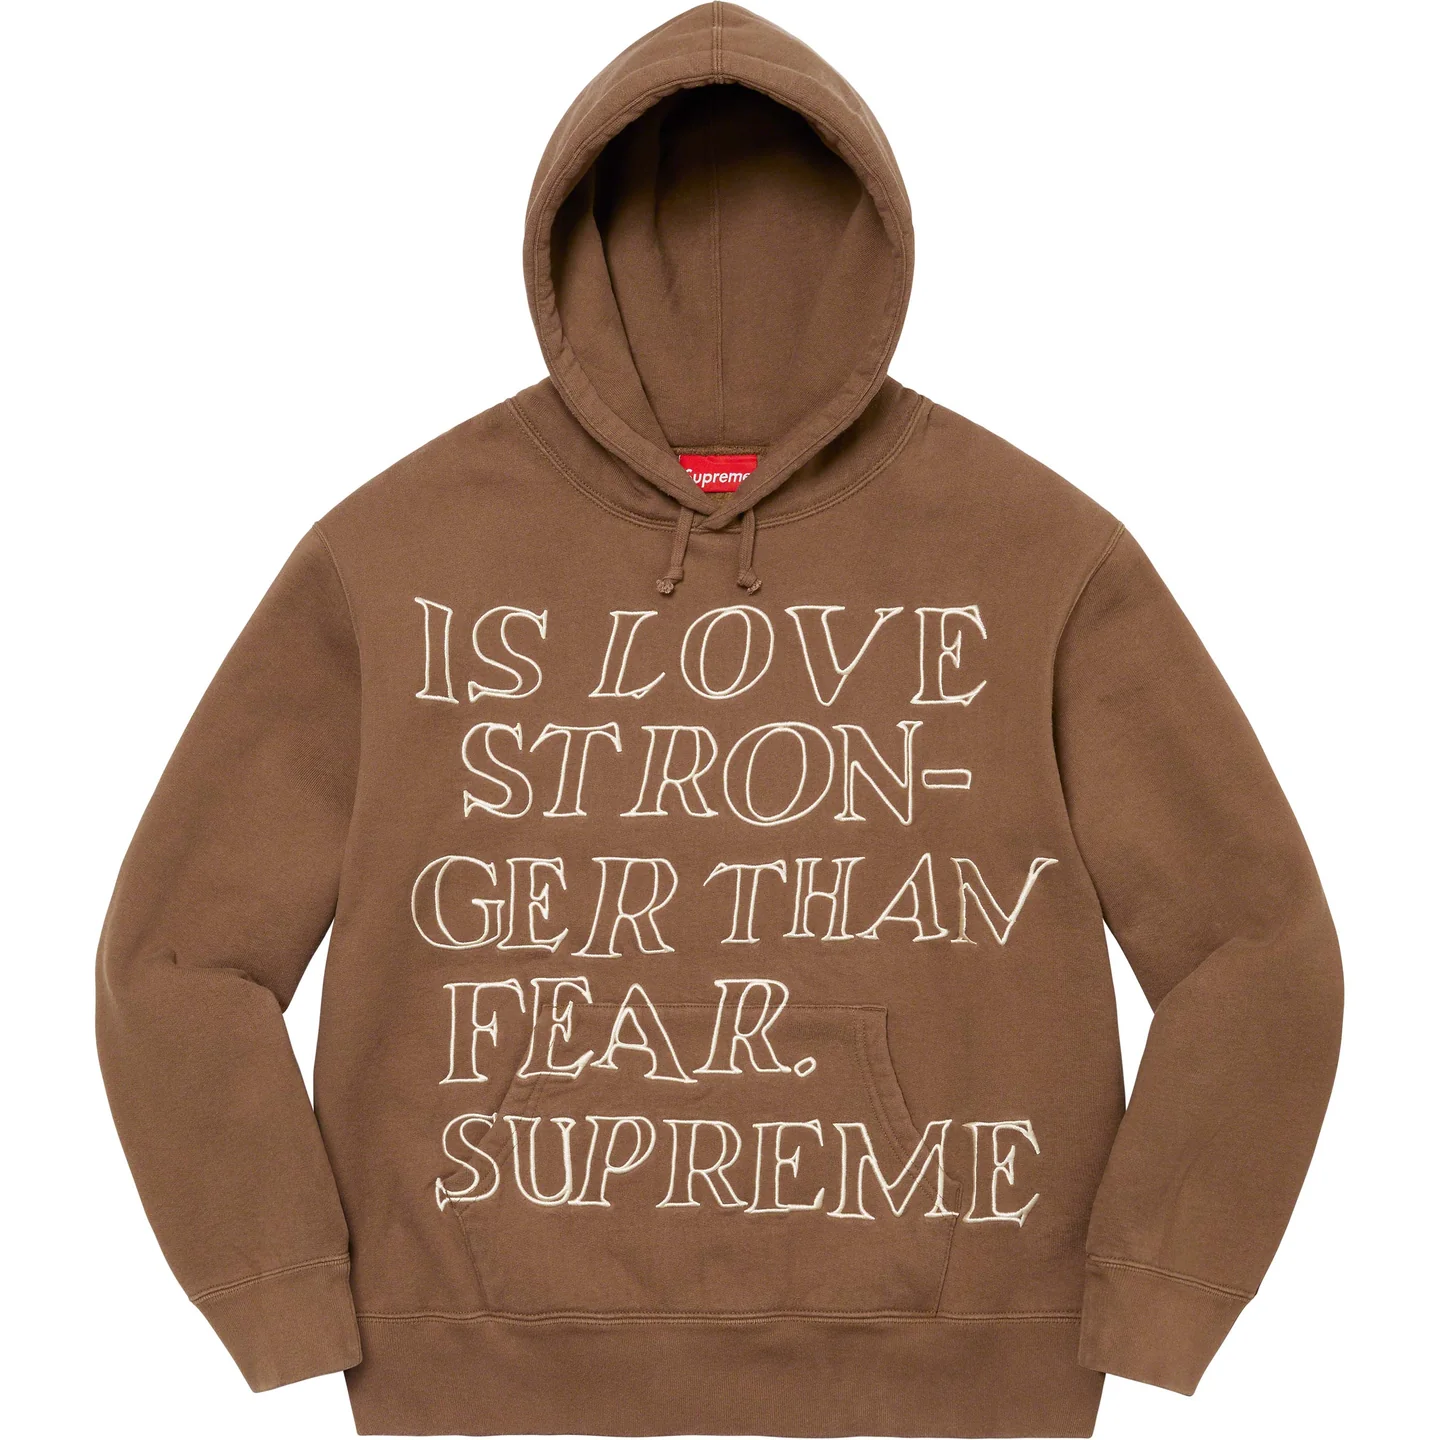 Supreme Stronger Than Fear Hooded Sweatshirt